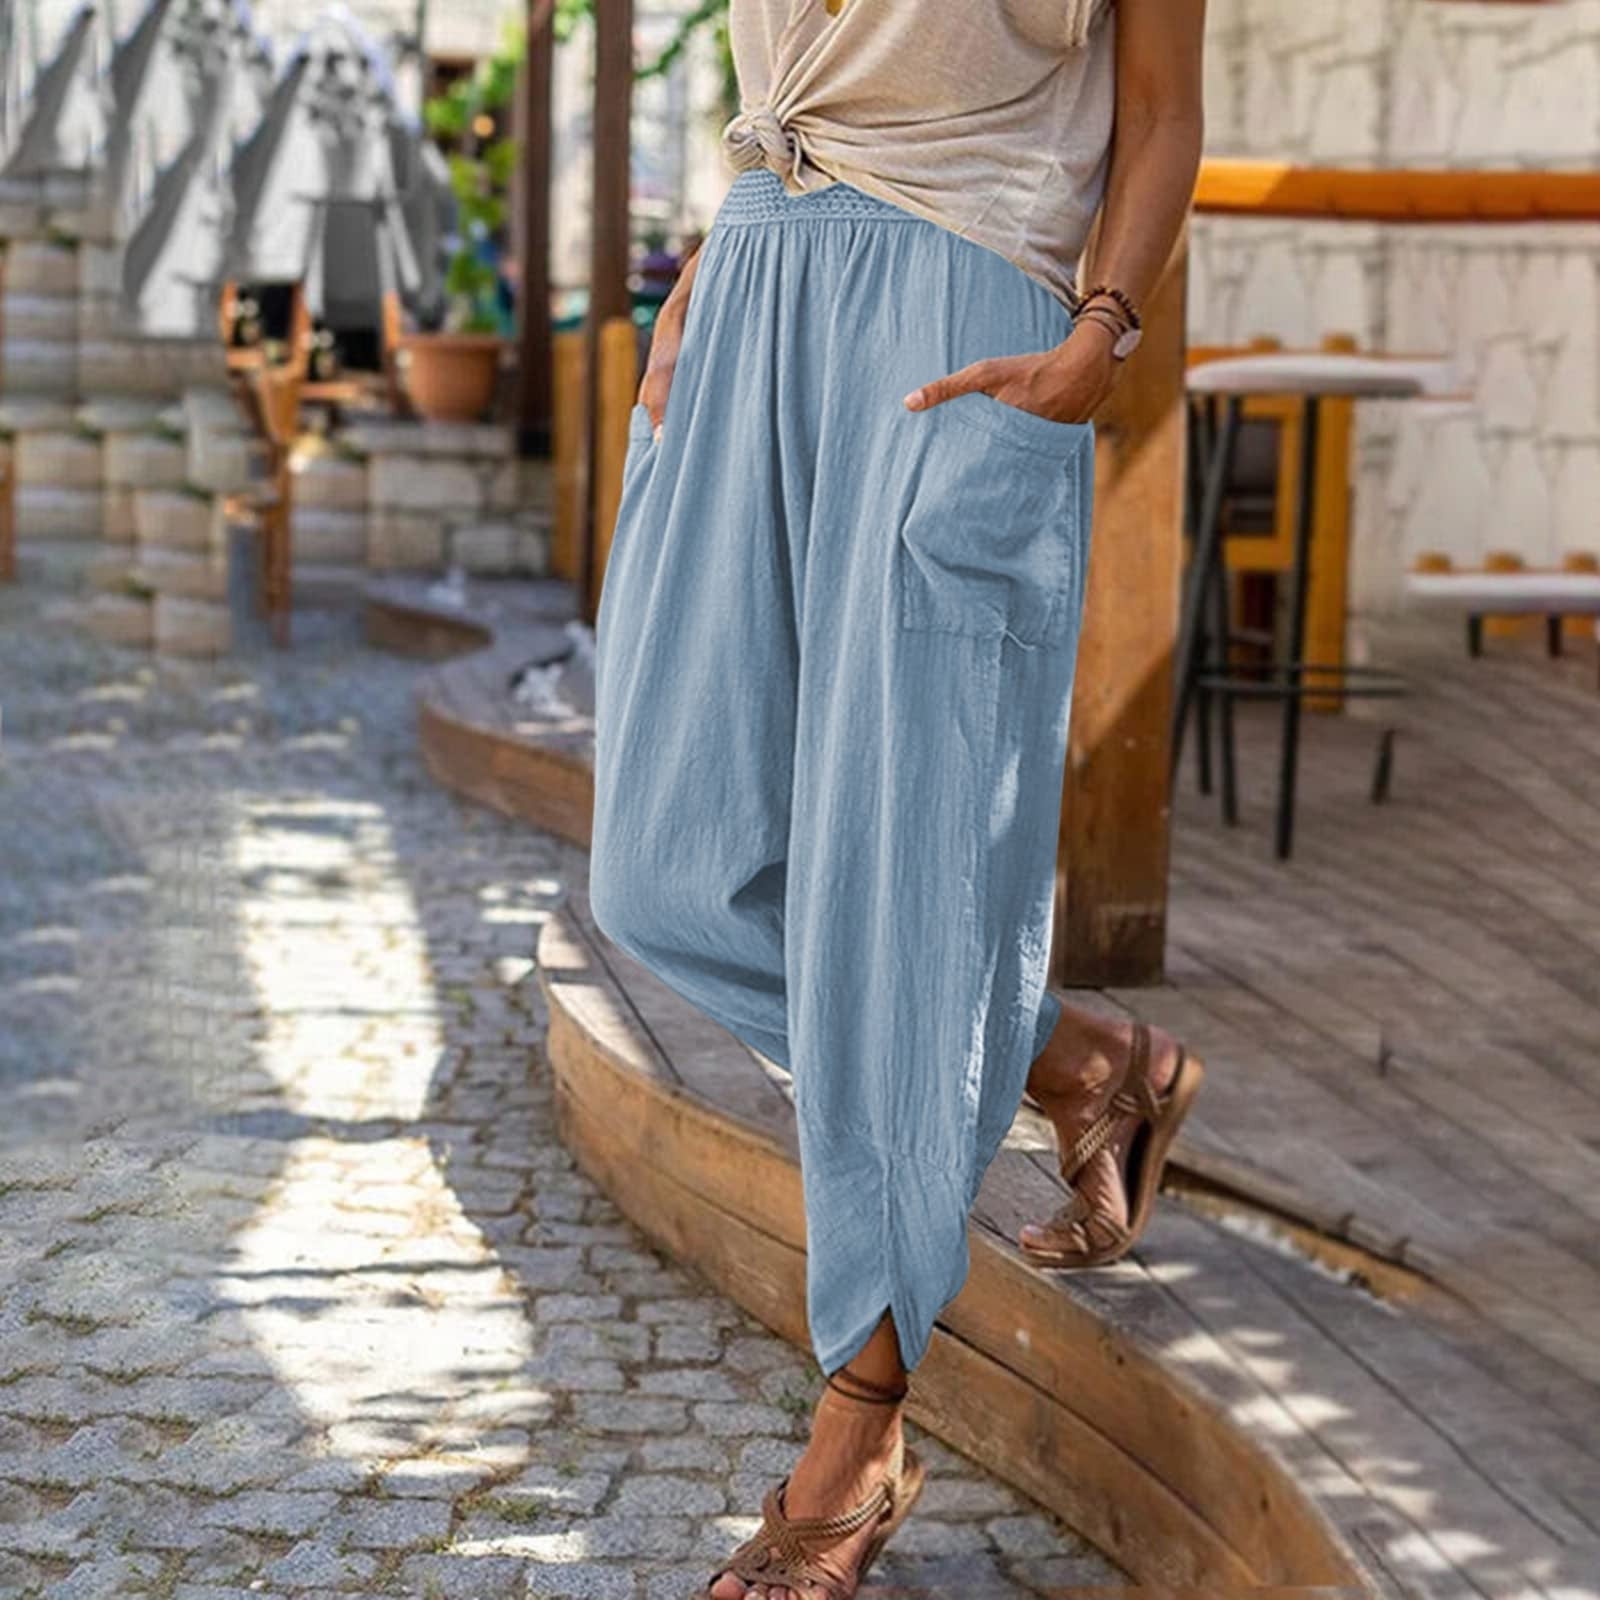 Zpanxa Women's Slacks Fashion Casual Solid Color Elastic Cotton